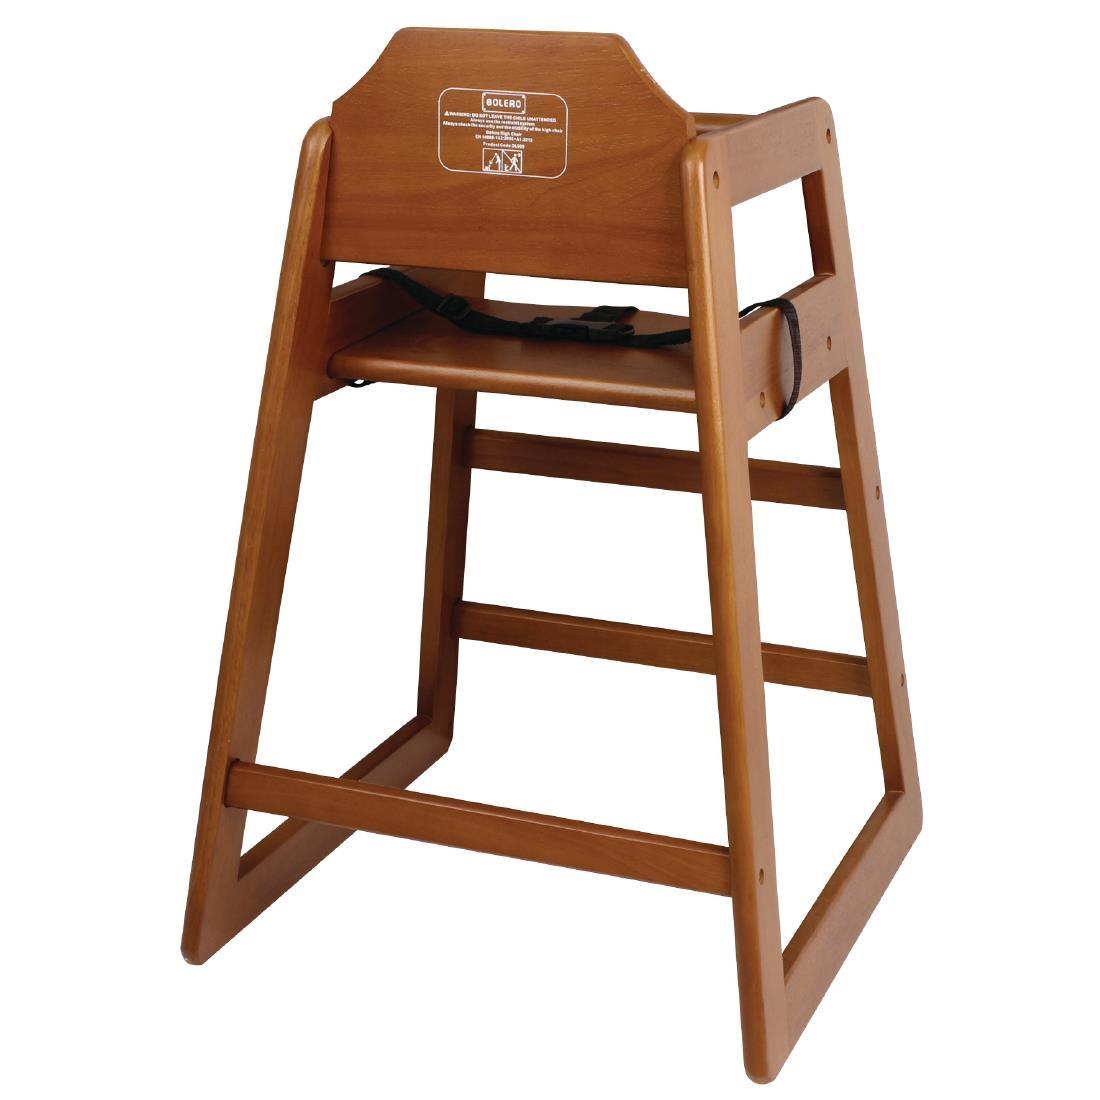 Bolero Wooden Highchair Dark Wood Finish - DL901  - 4